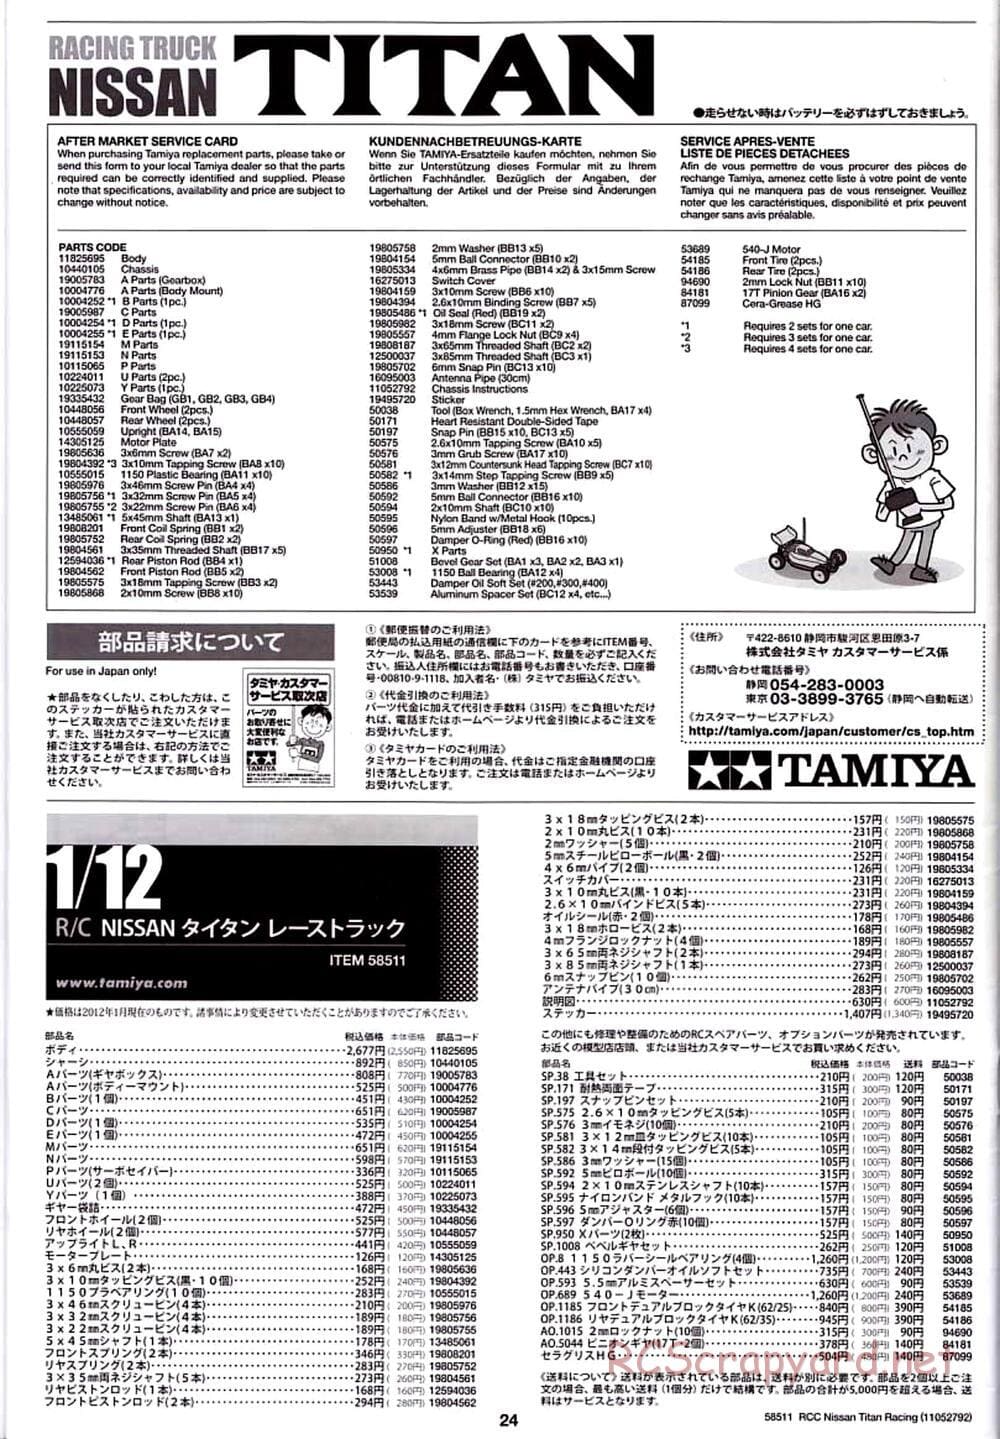 Tamiya - Nissan Titan Chassis - Manual - Page 24